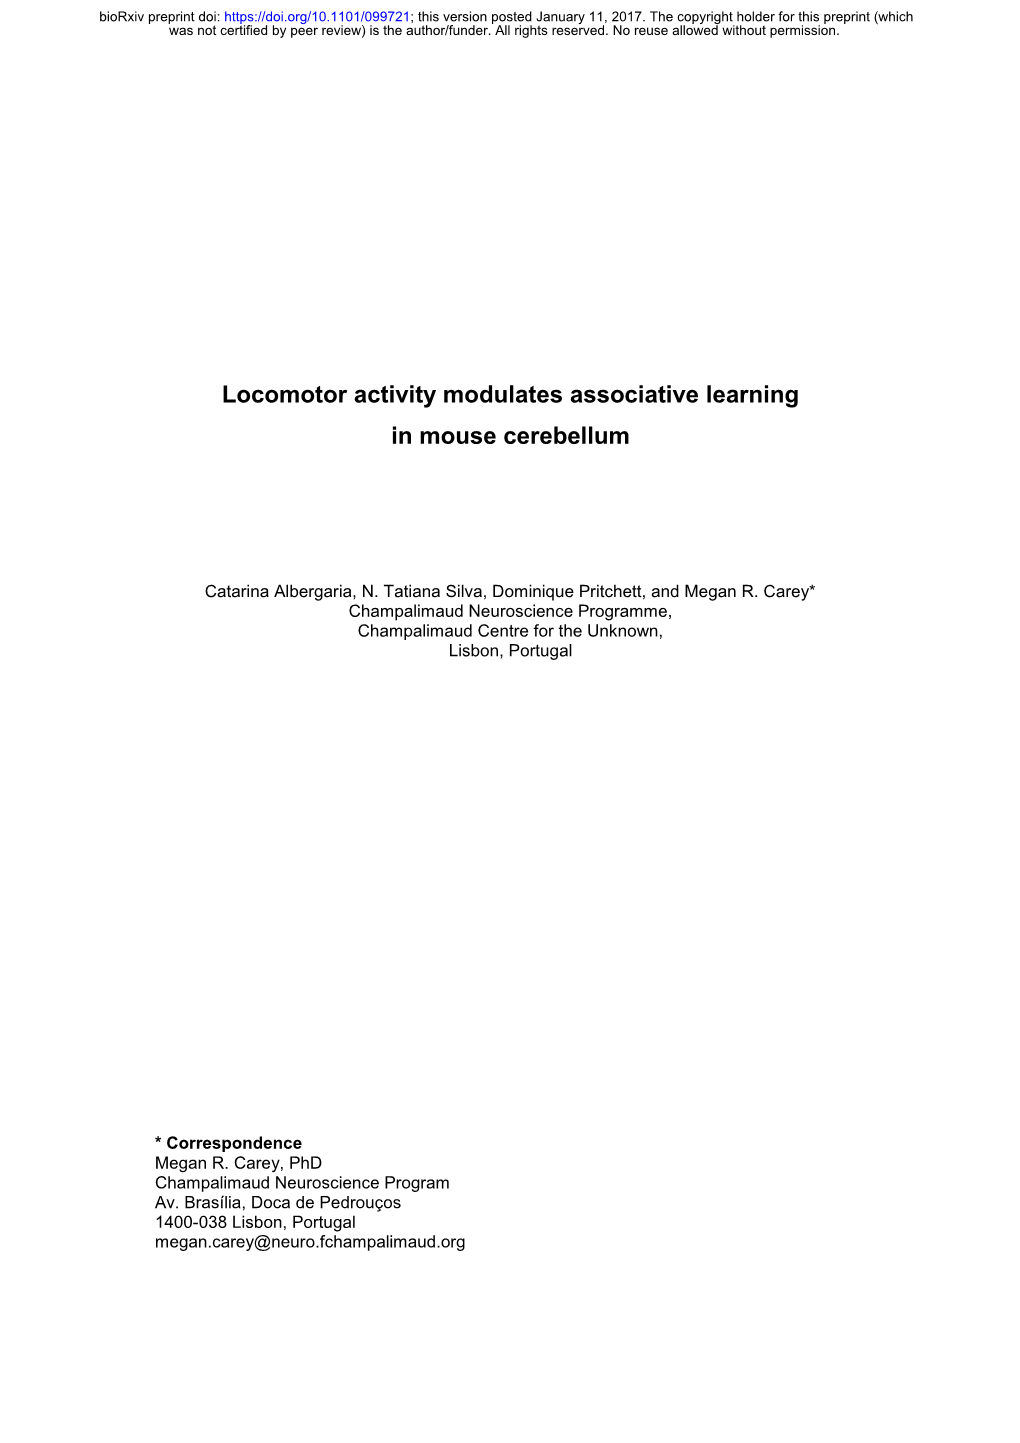 Locomotor Activity Modulates Associative Learning in Mouse Cerebellum